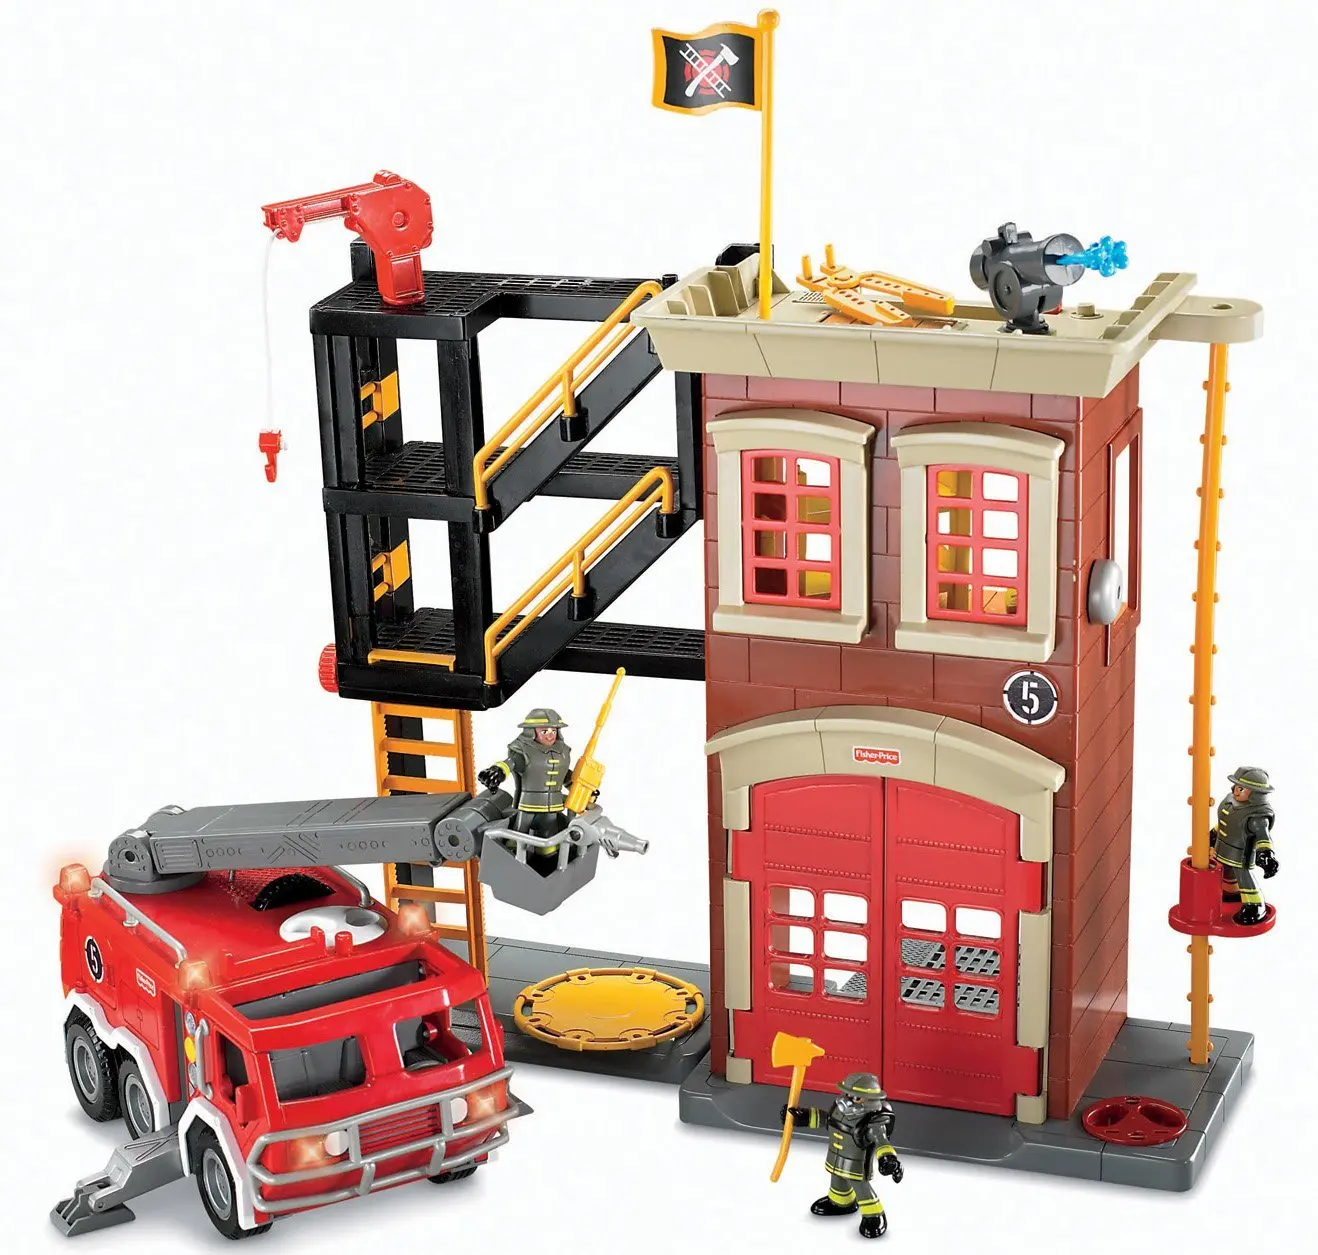 firehouse playset